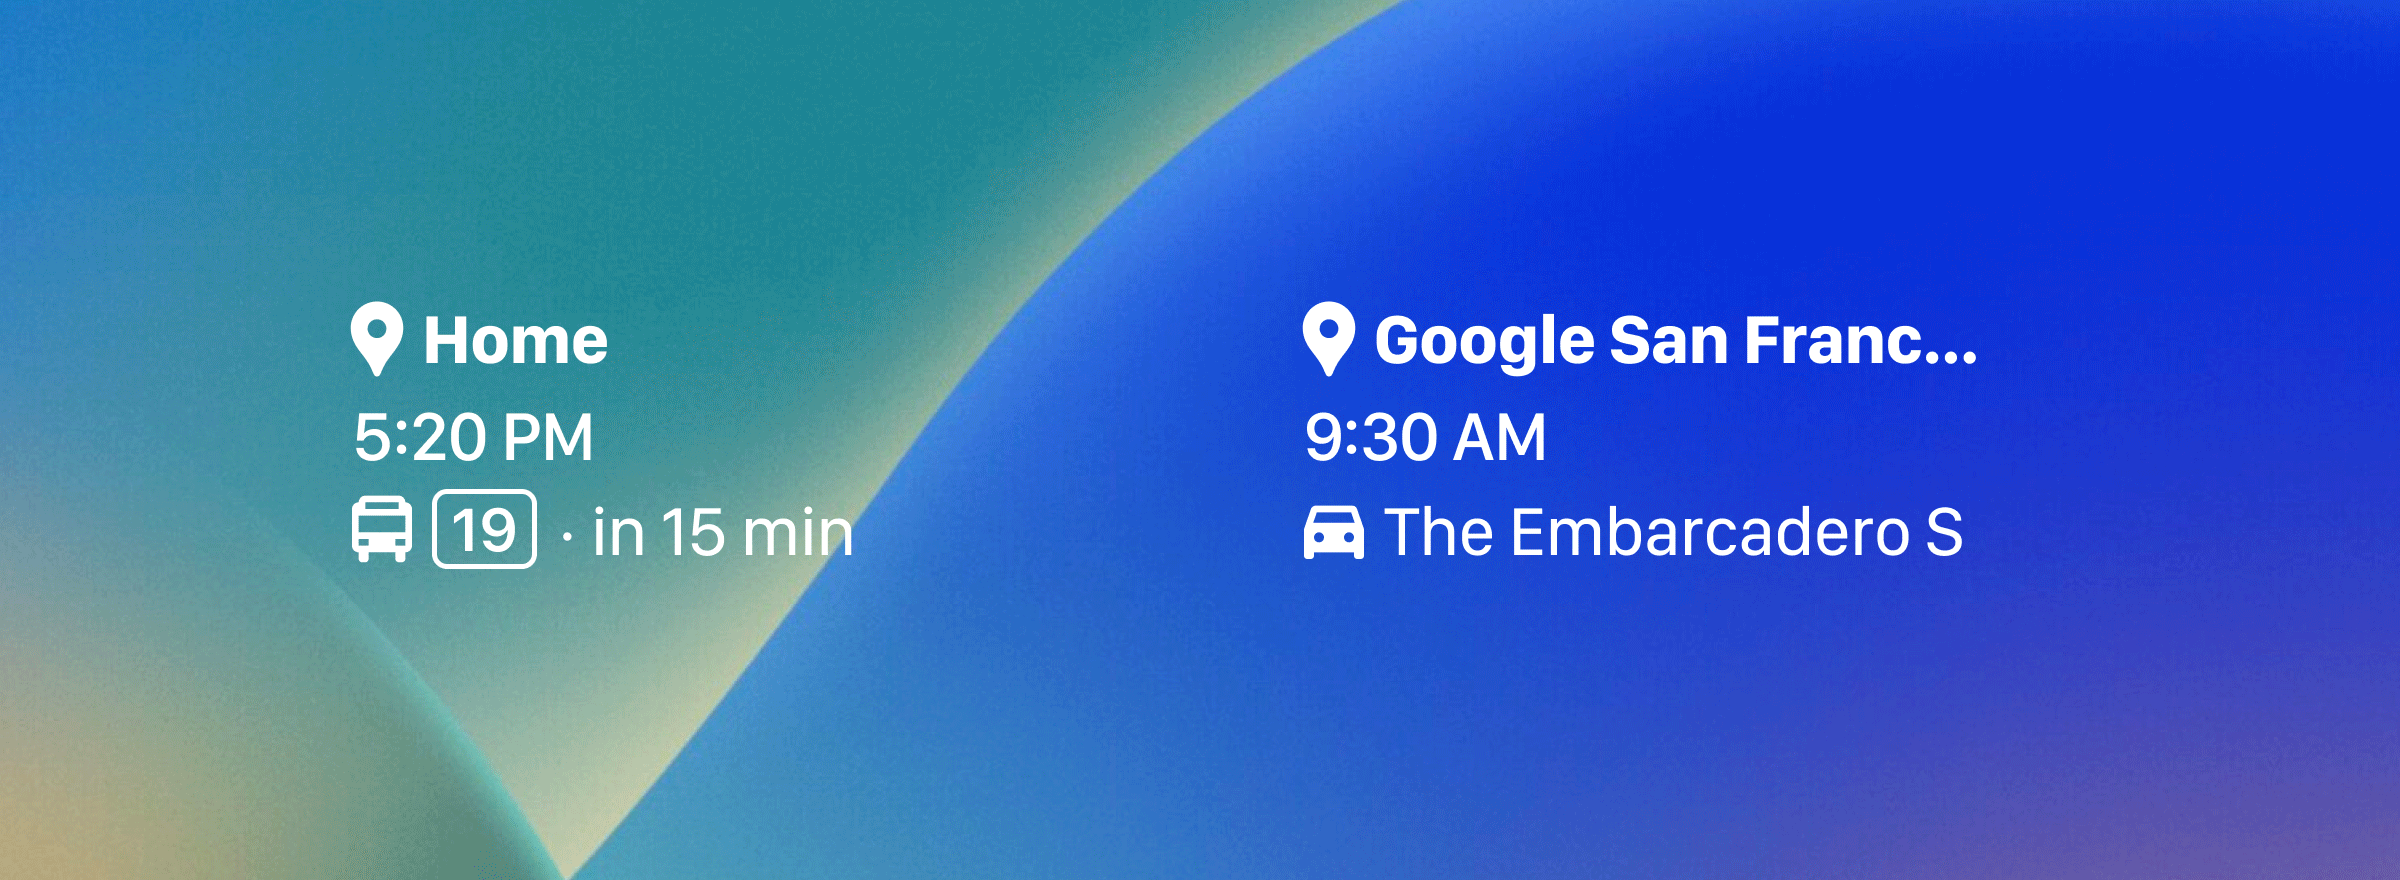 google-ios-16-lockscreen-widgets-4-anim